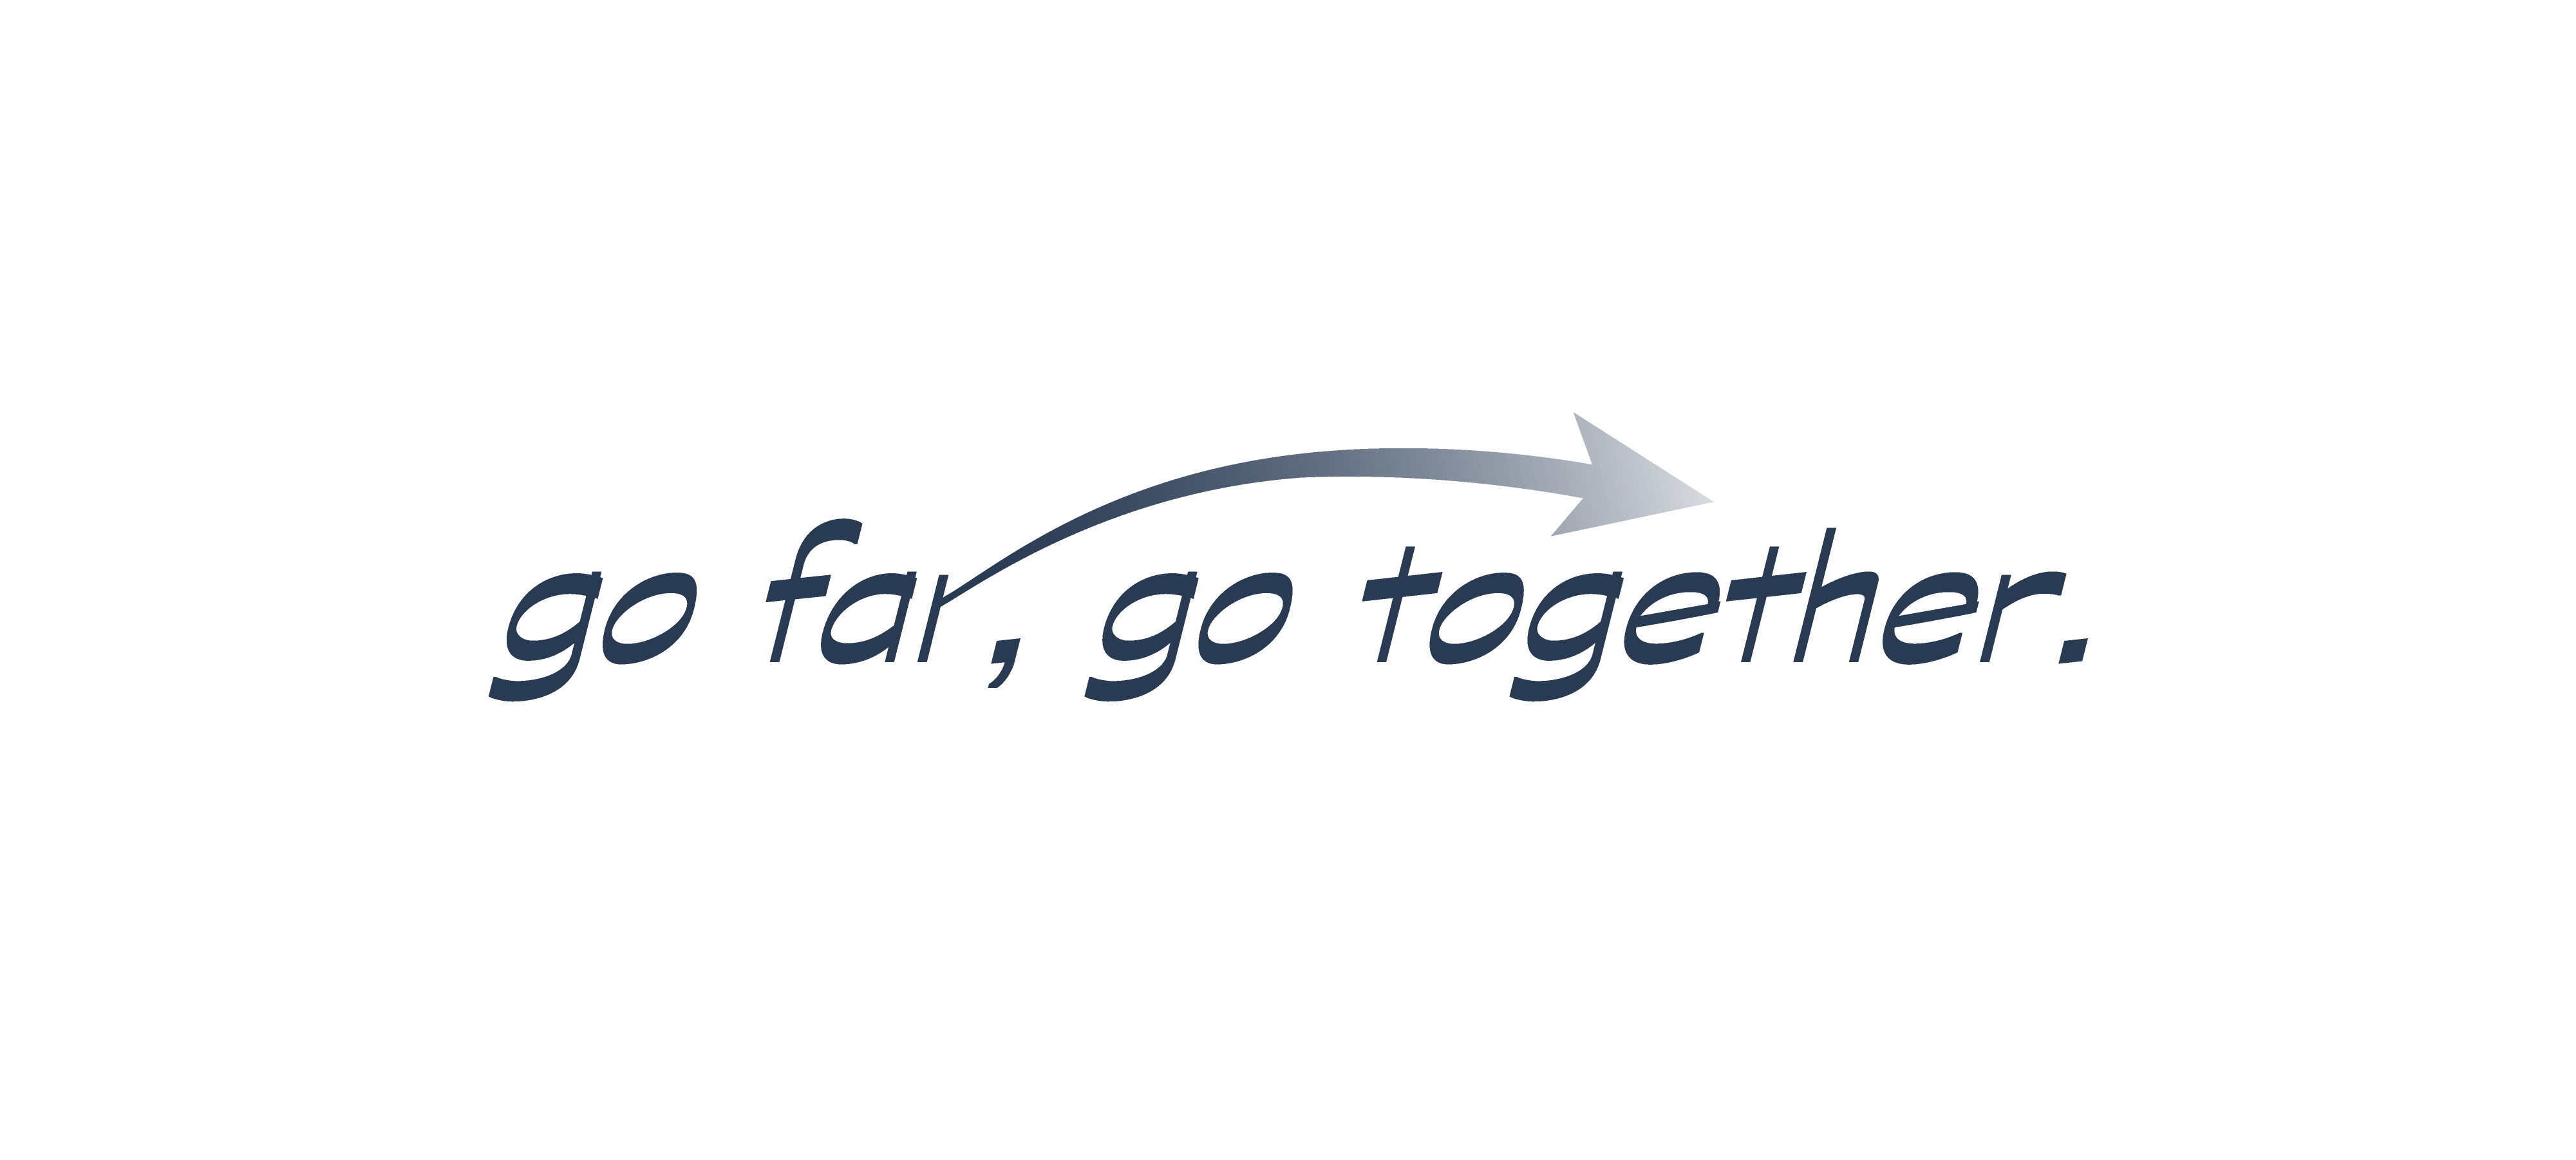 go far, go together.